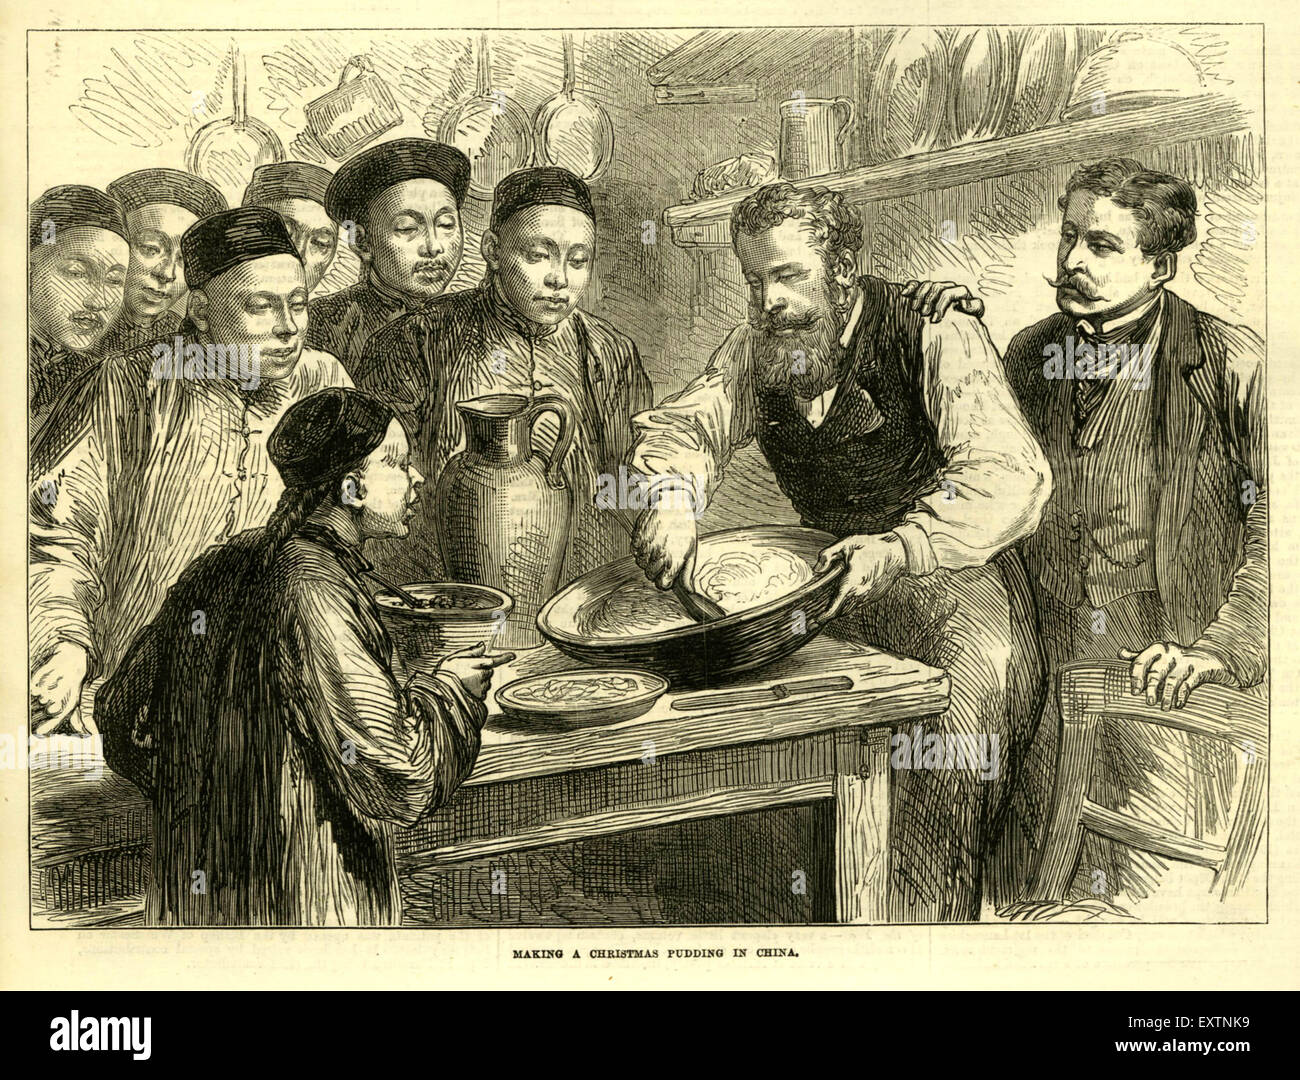 1870er Jahren UK Christmas Puddings in China Magazin Platte machen Stockfoto